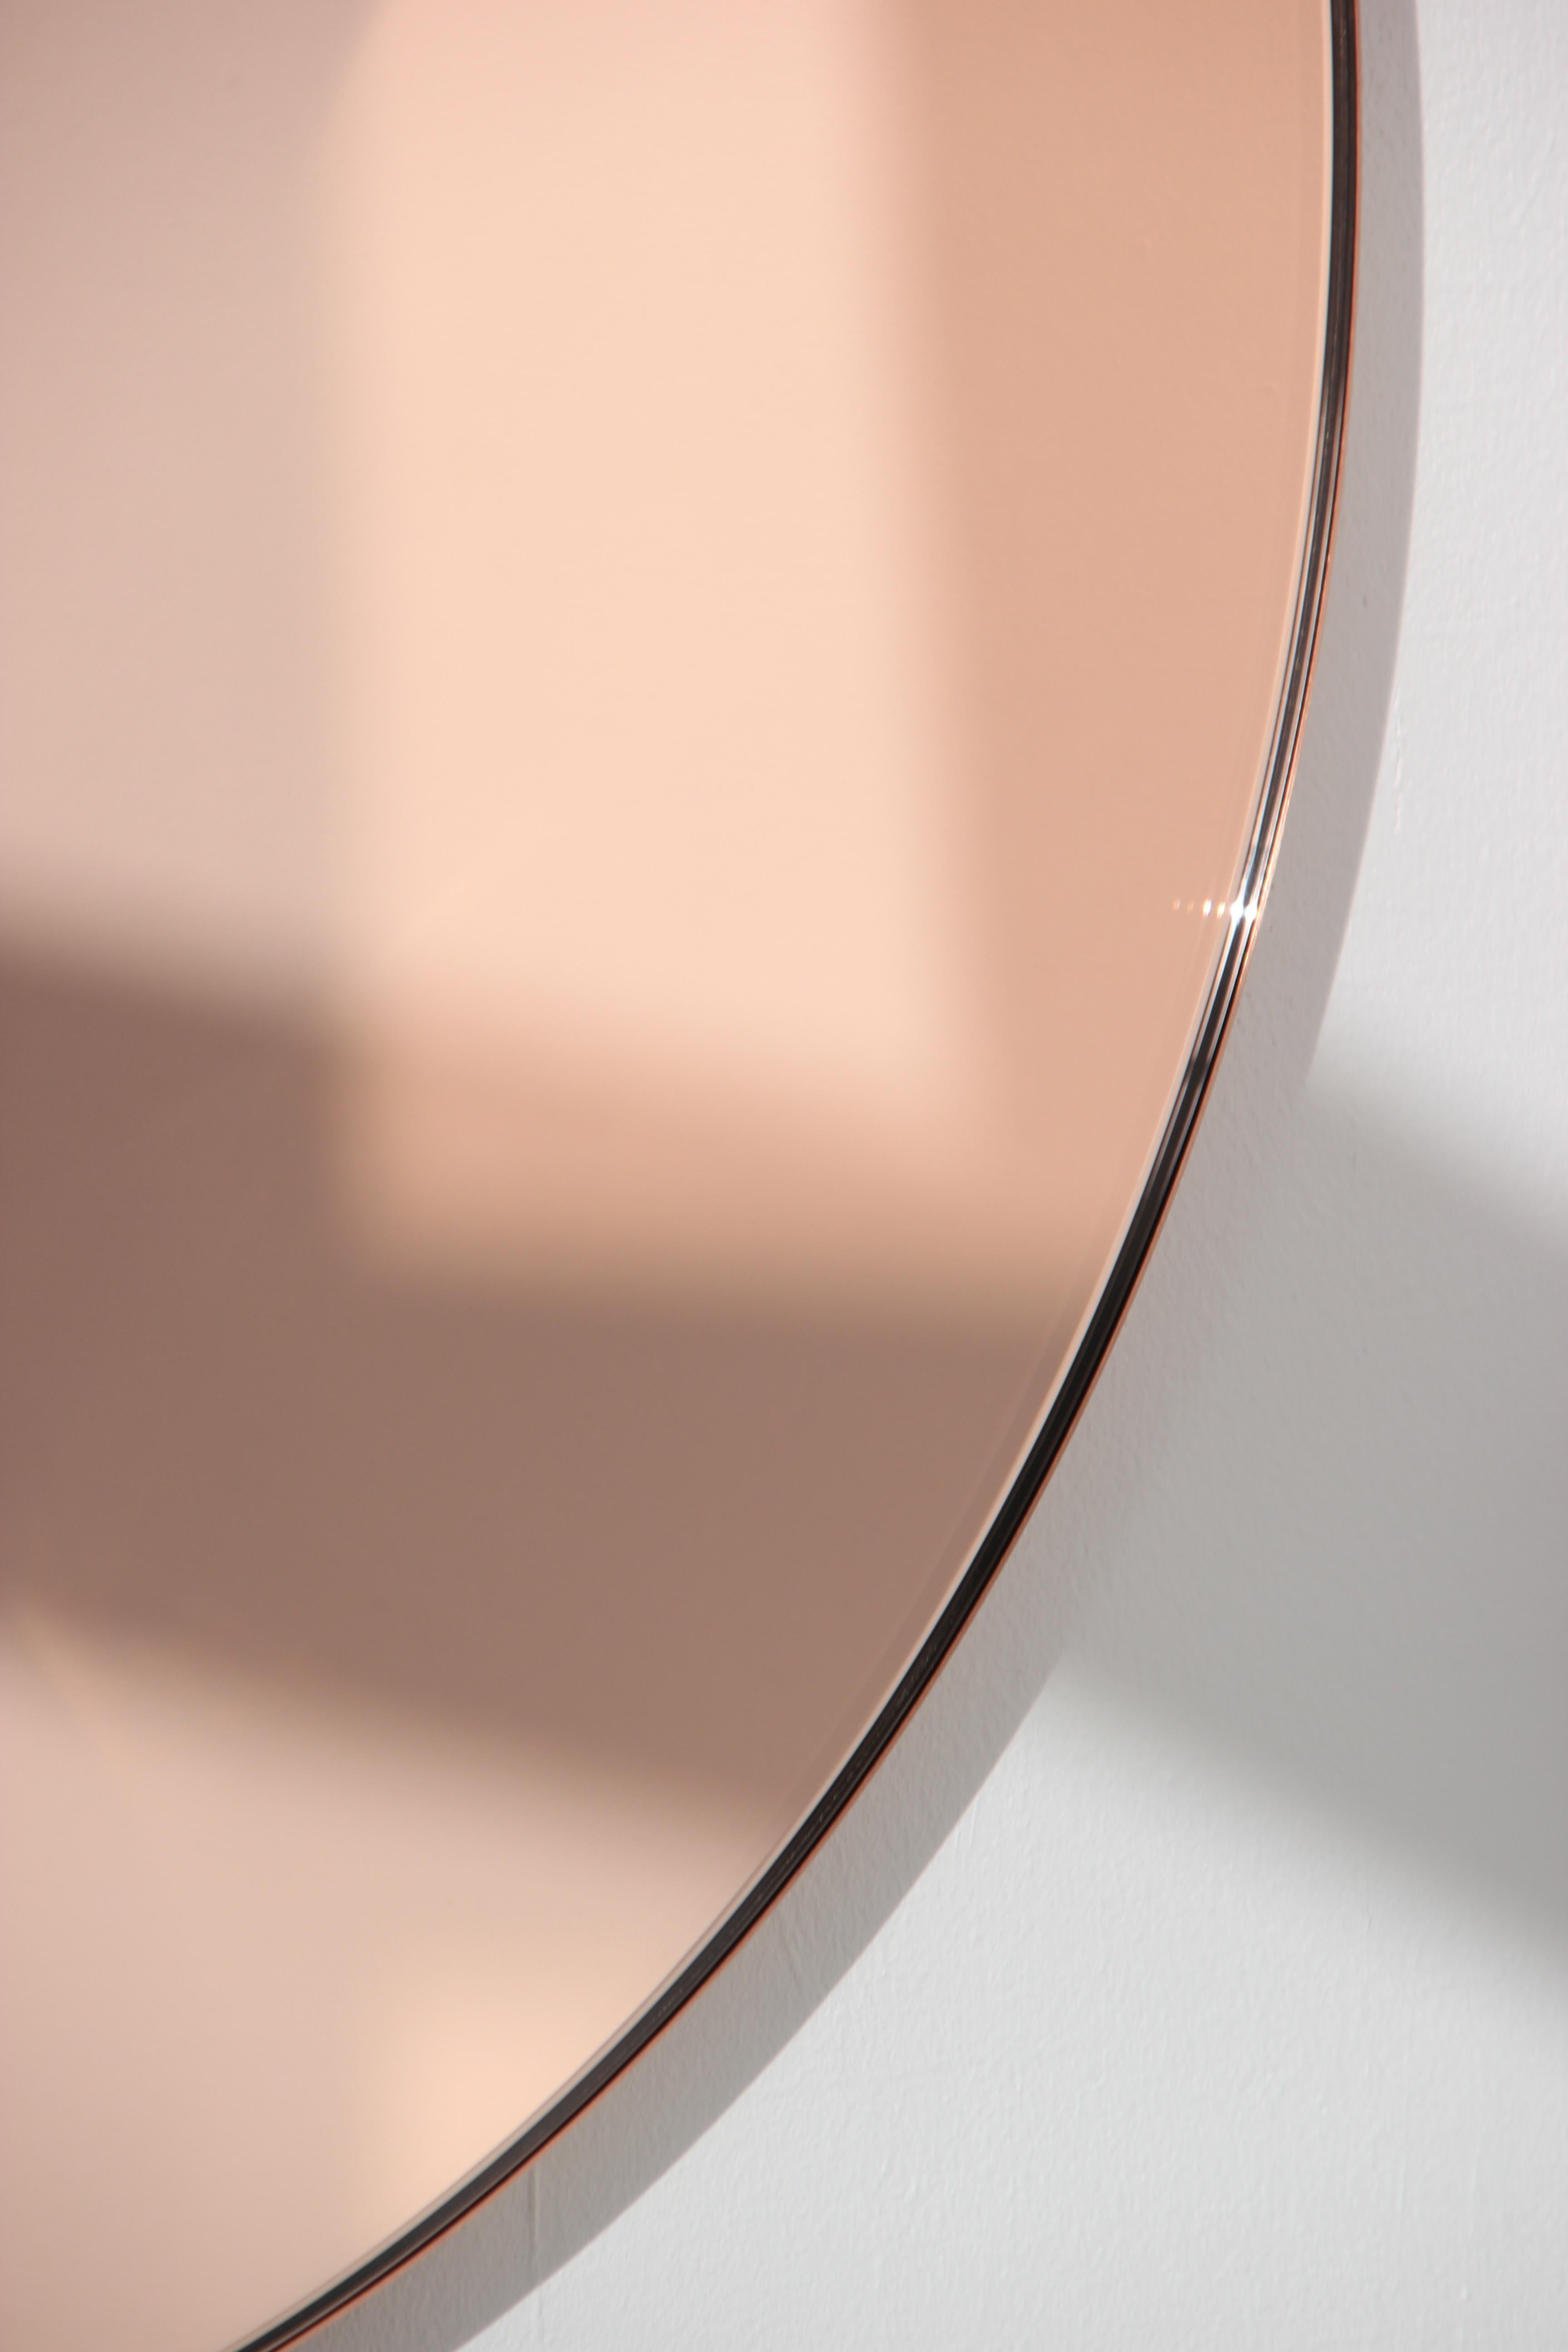 British Orbis™ Rose Gold Tinted Round Modern Mirror with Copper Frame - Oversized